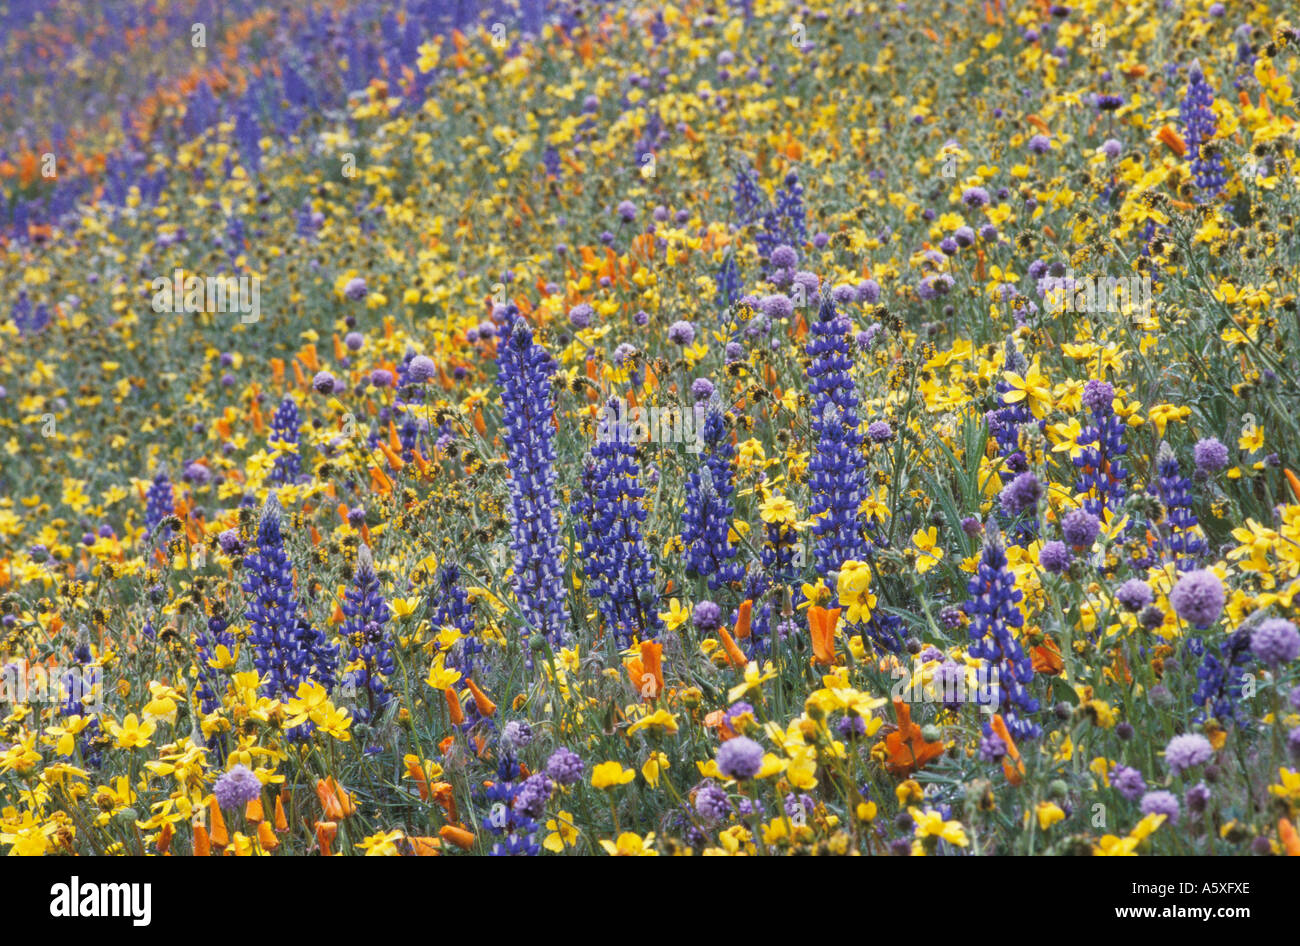 Wildflowers in Spring Gorman California USA Flowers are Californian poppy Eschscholzia californica Bentham Lupine Lupinus bentha Stock Photo